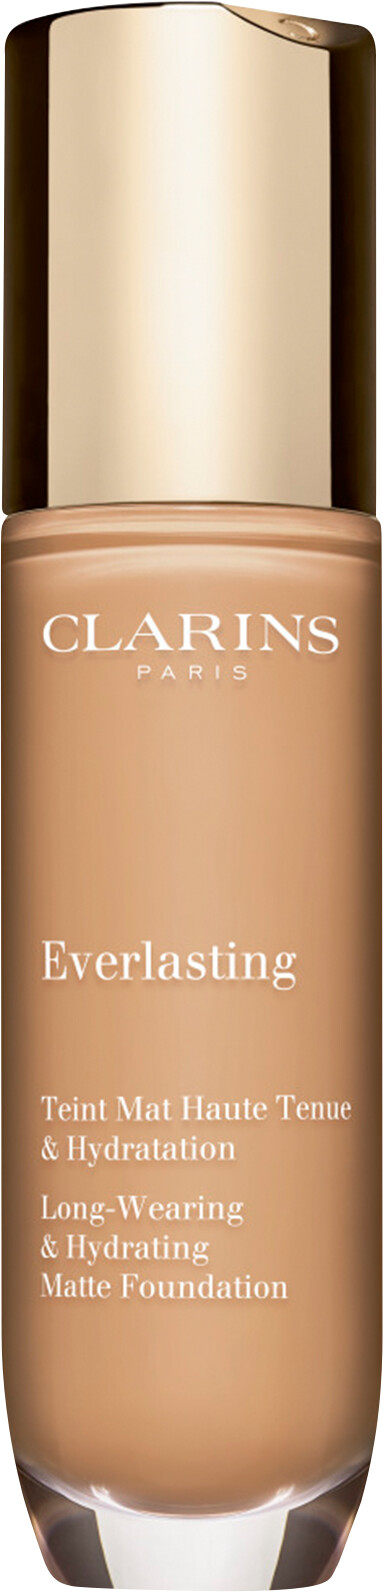 Clarins Everlasting Long-Wearing & Hydrating Matte Foundation 30ml 111N - Auburn